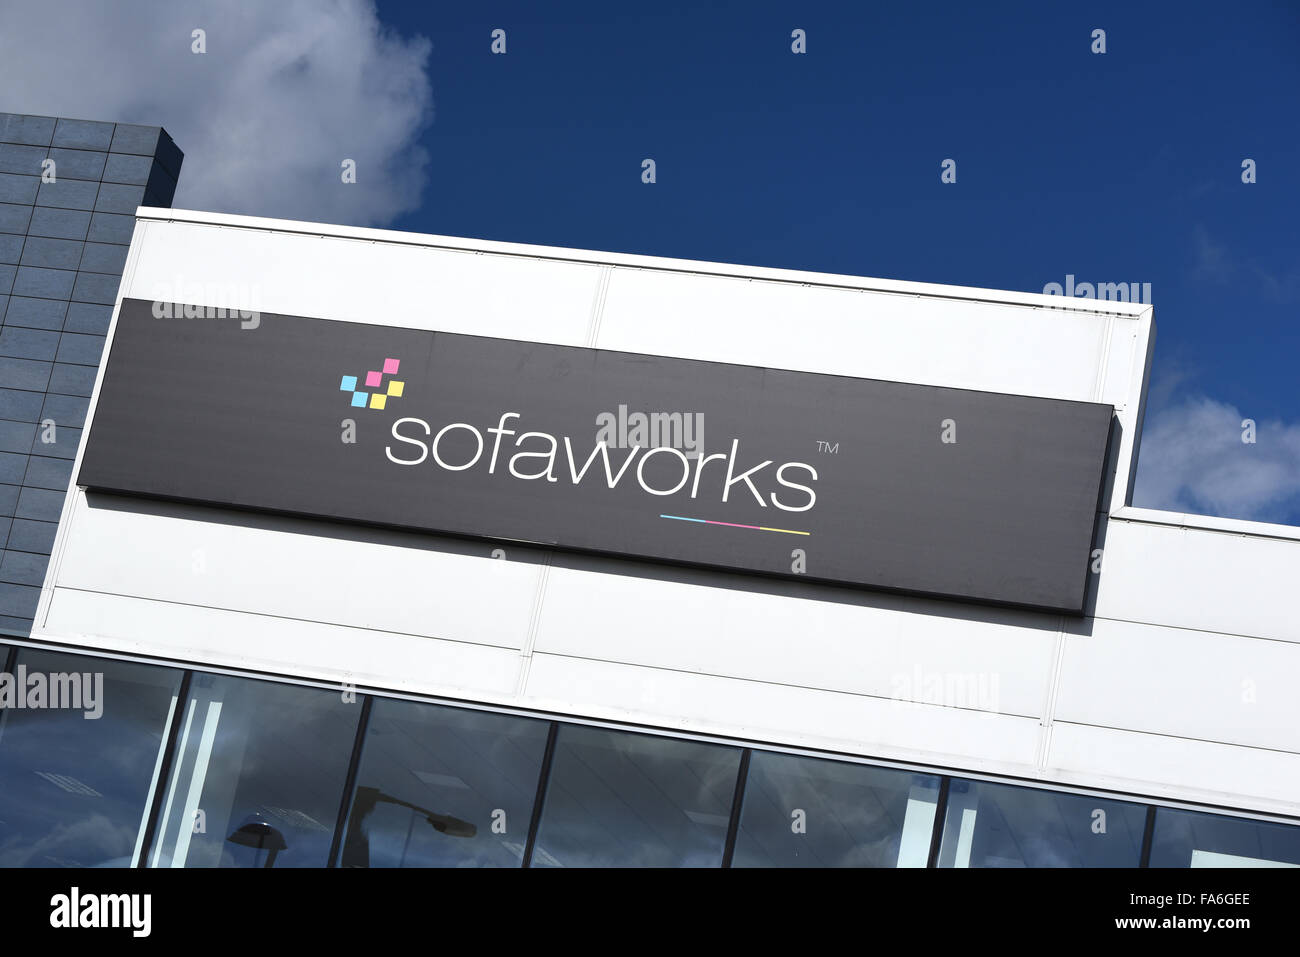 sofaworks shop, solihull, uk Stock Photo